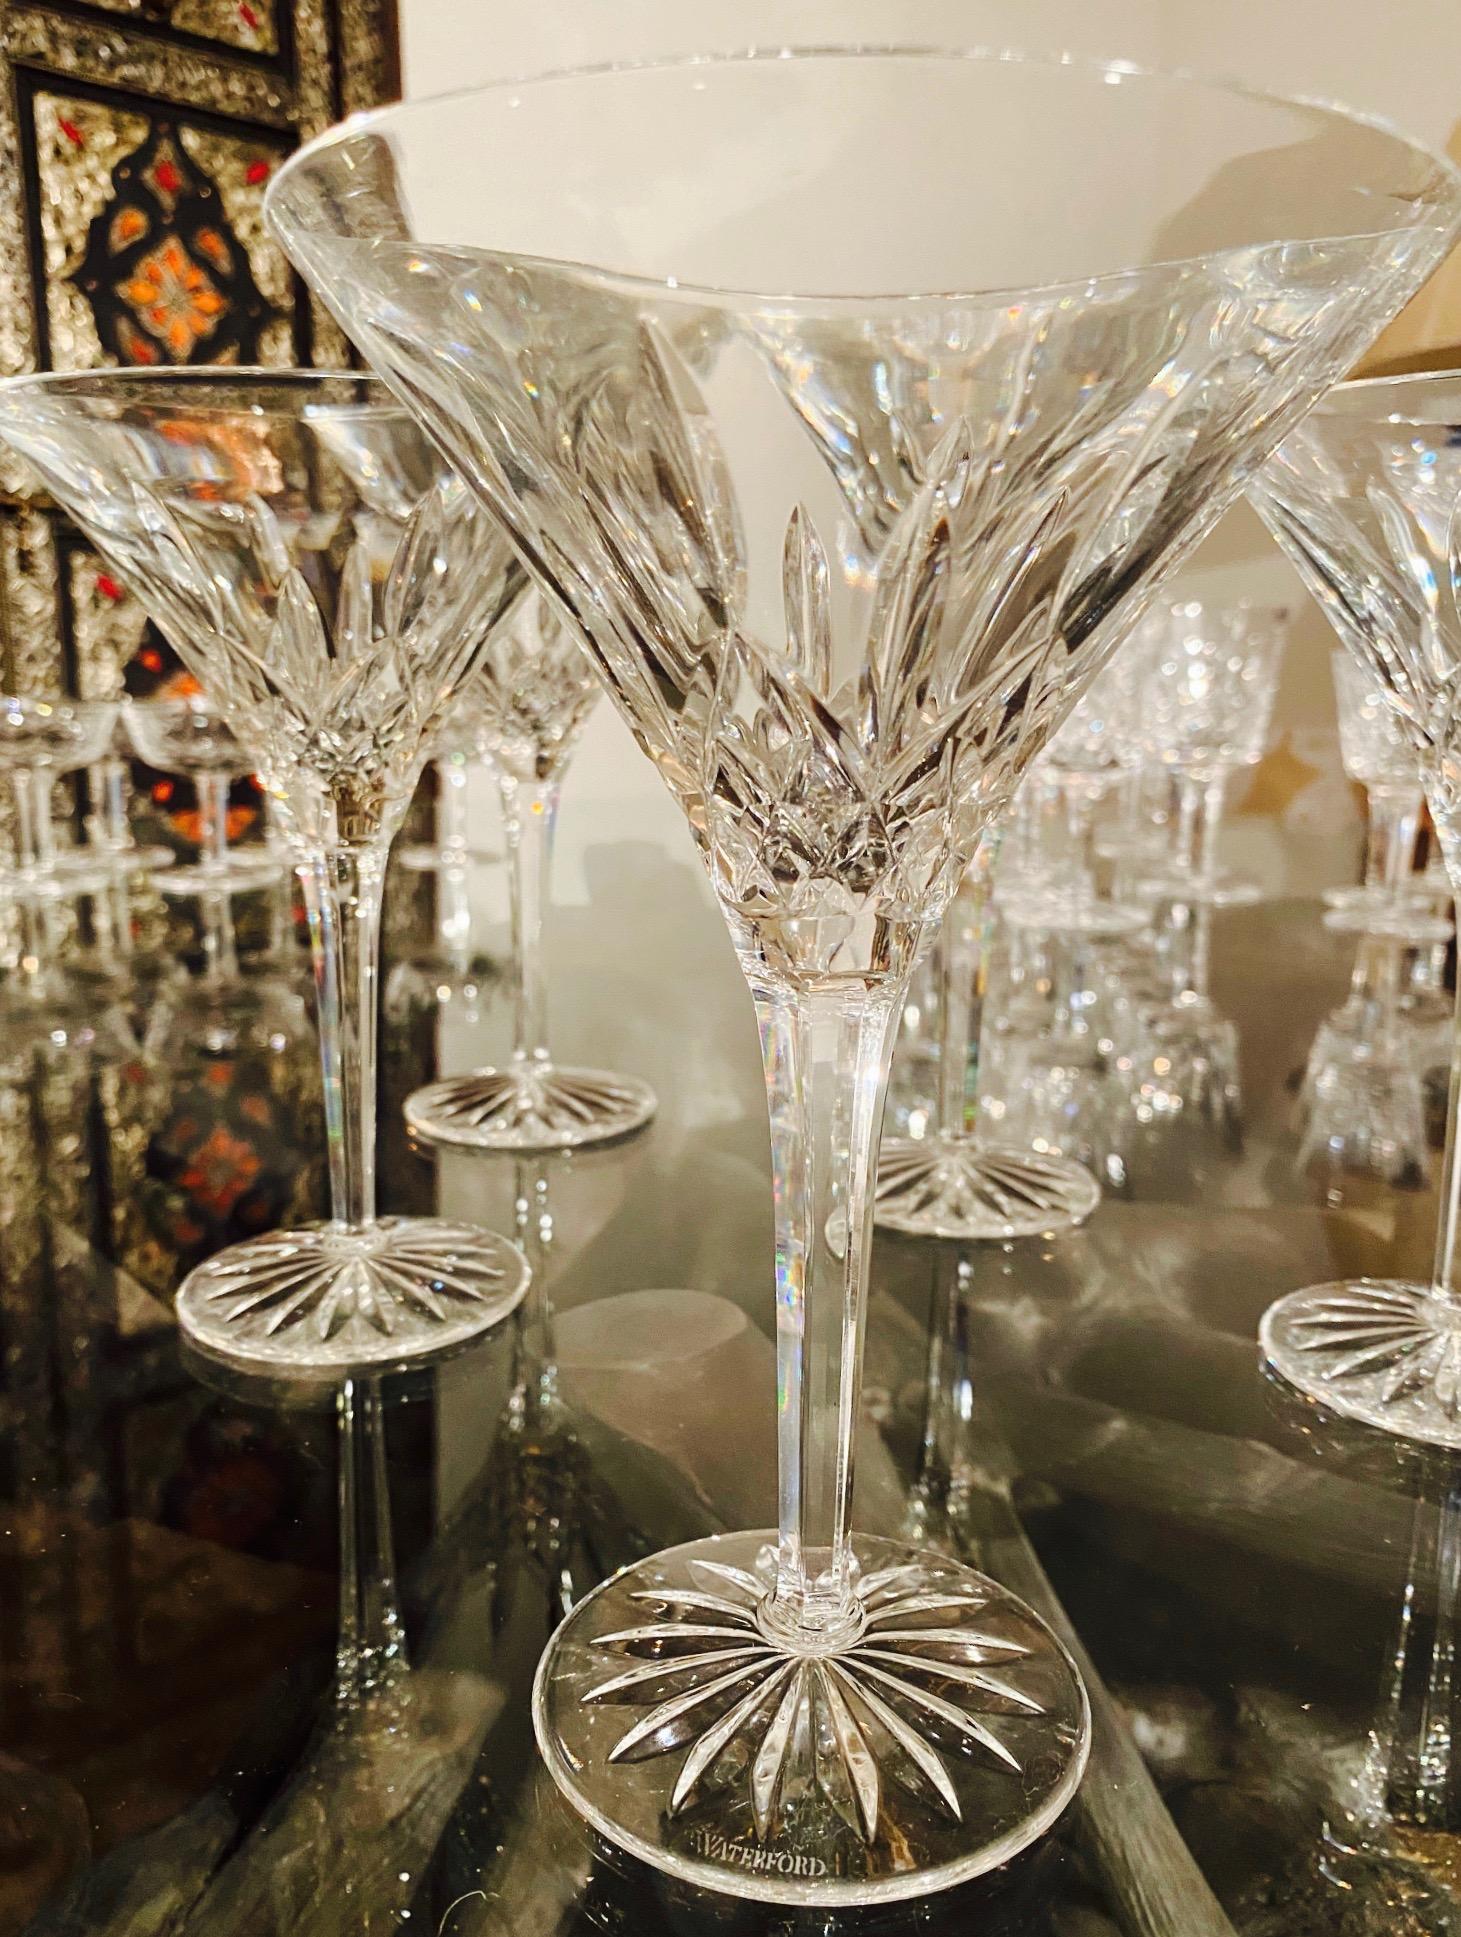 German Set of Six Waterford Crystal Tall Martini Glasses, Lismore Series, circa 1995